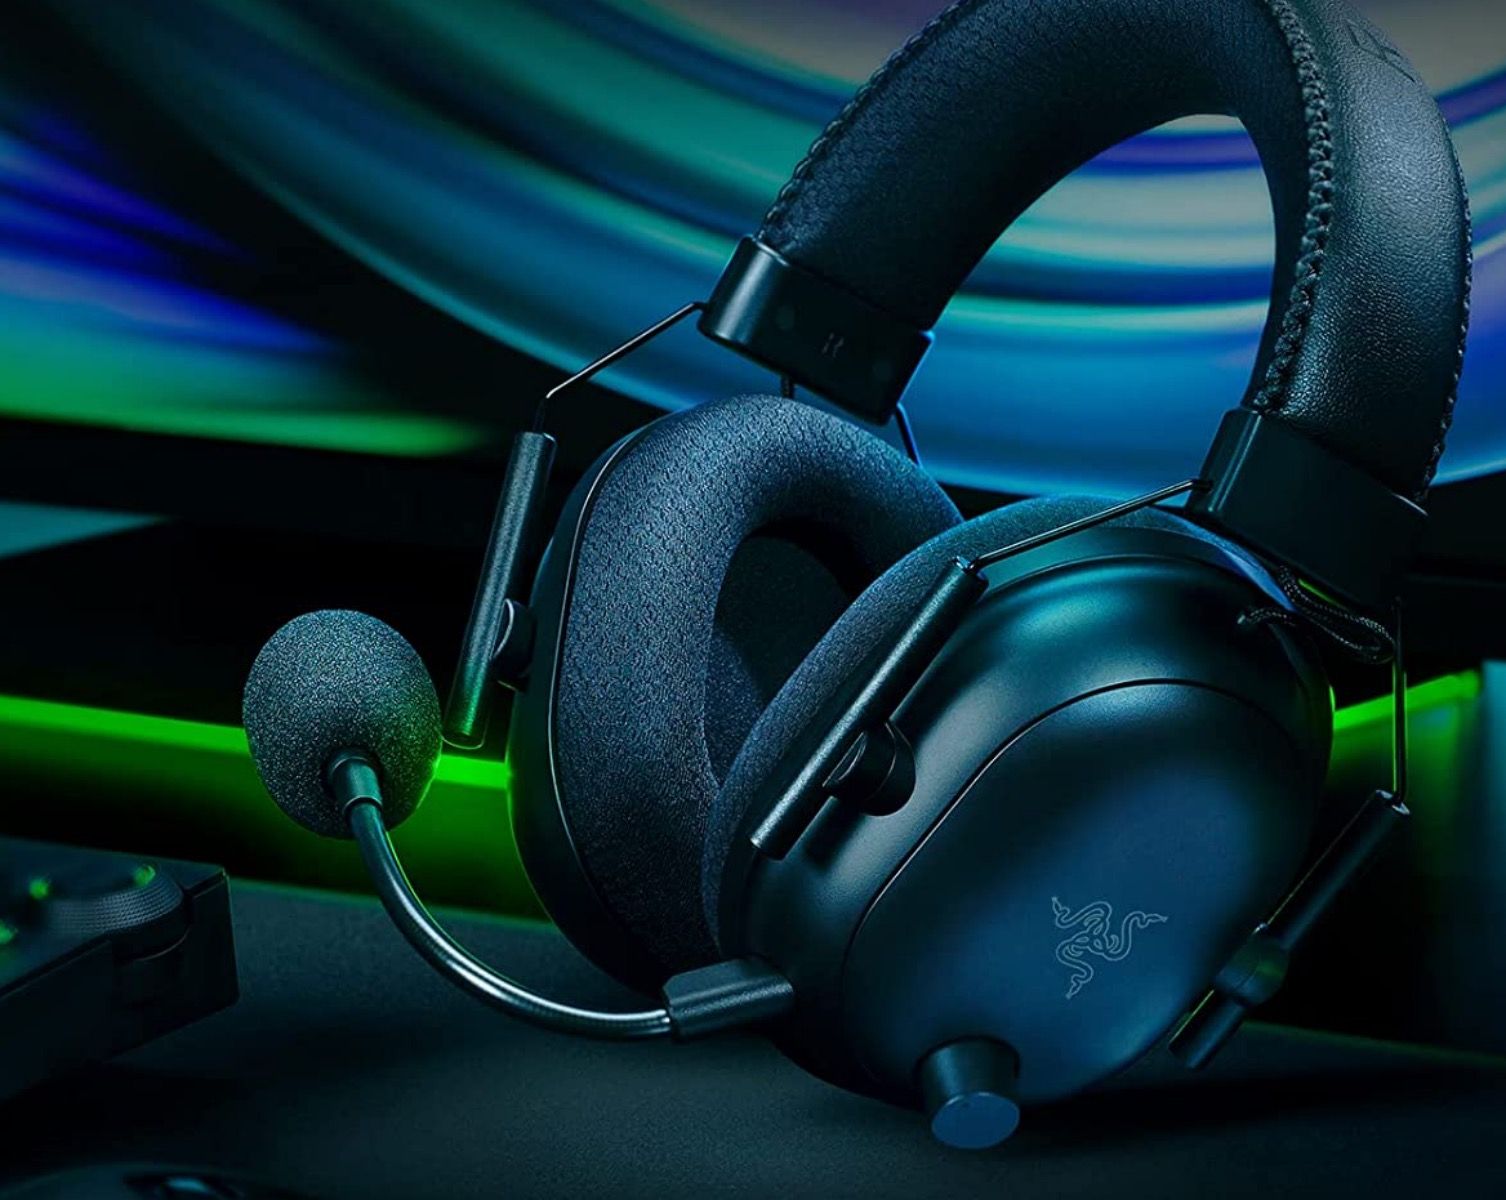 A sideshot of a pair of black Razer BlackShark V2 gaming headphones on a colorful vibrant background